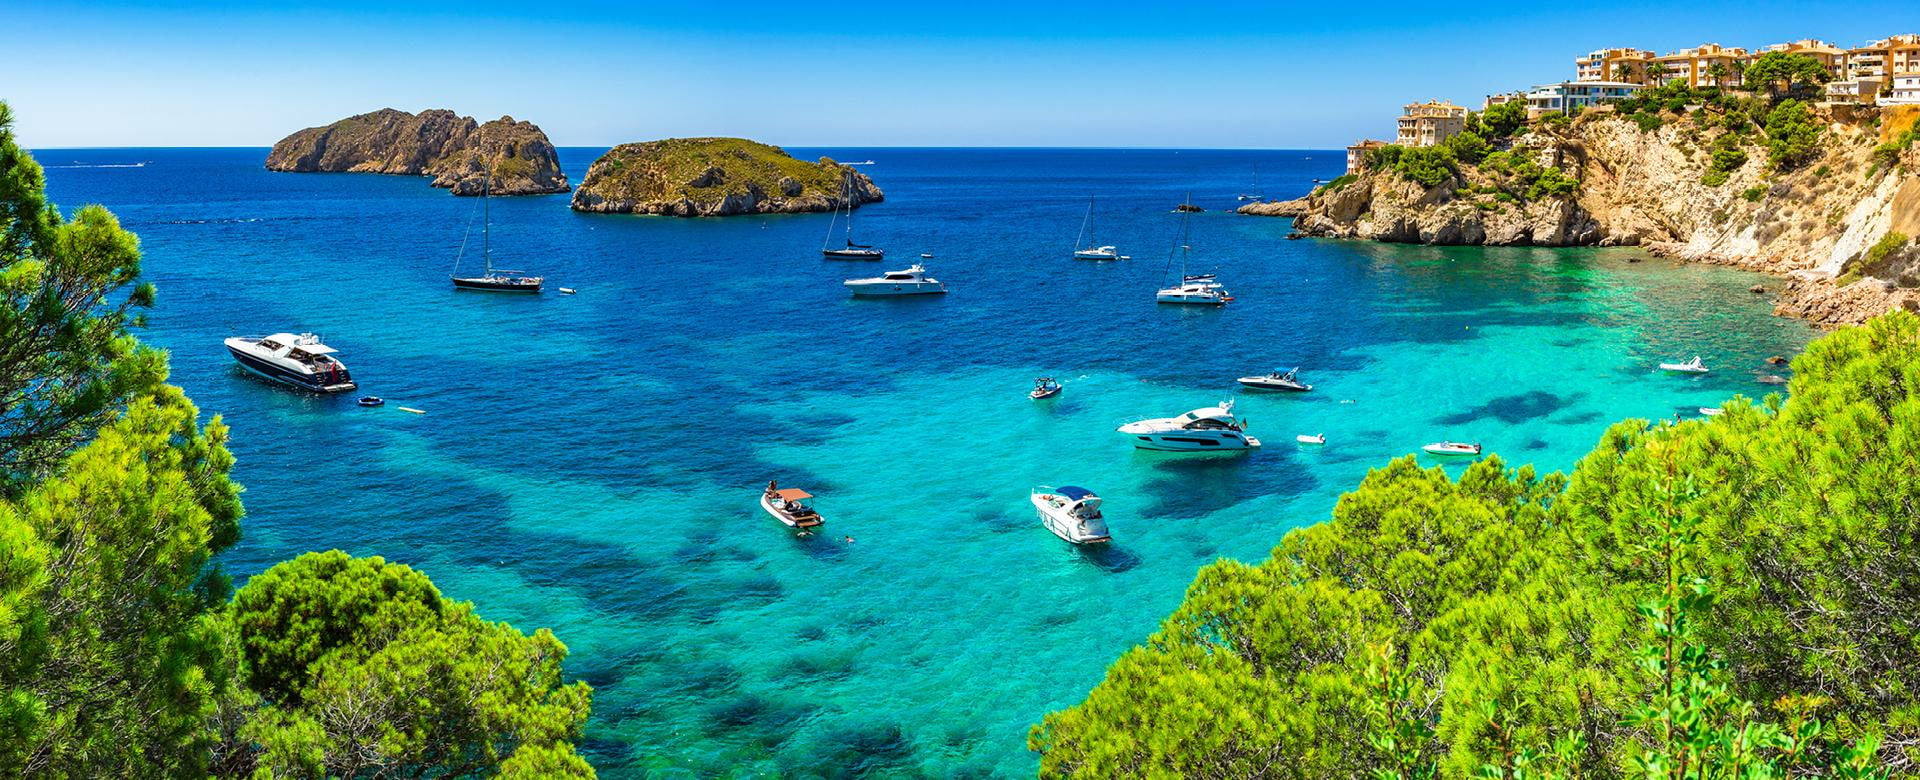 Strand Mallorca mit Booten